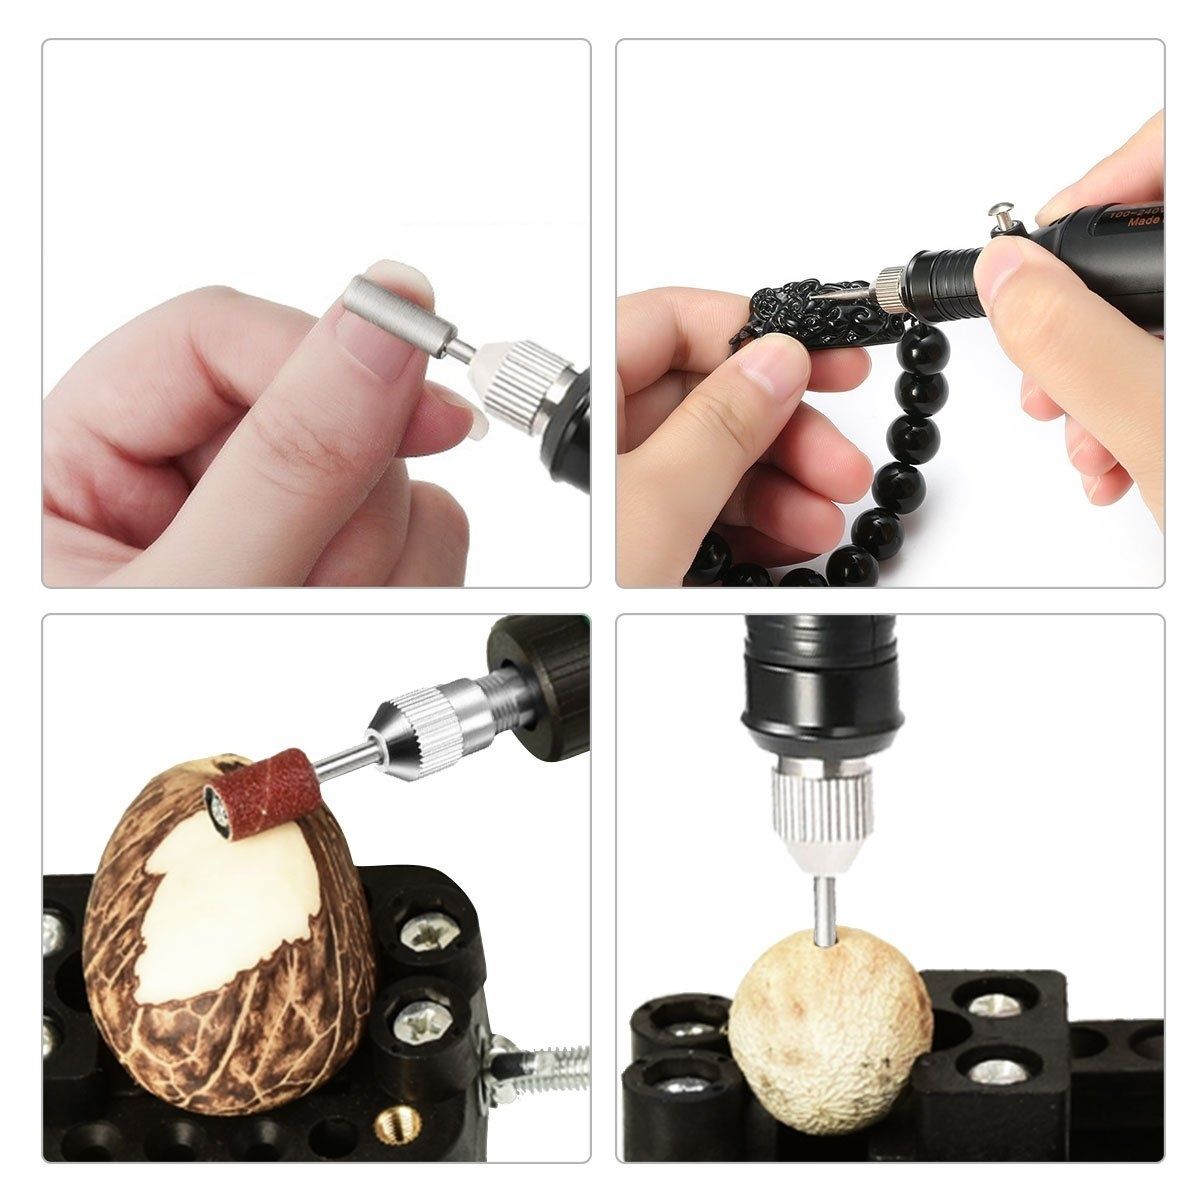 70Pcs-Mini-DIY-Electric-Engraving-Pen-Kit-Adjustable-Speed-Etching-Drilling-Polishing-Pen-For-Jewelr-1684930